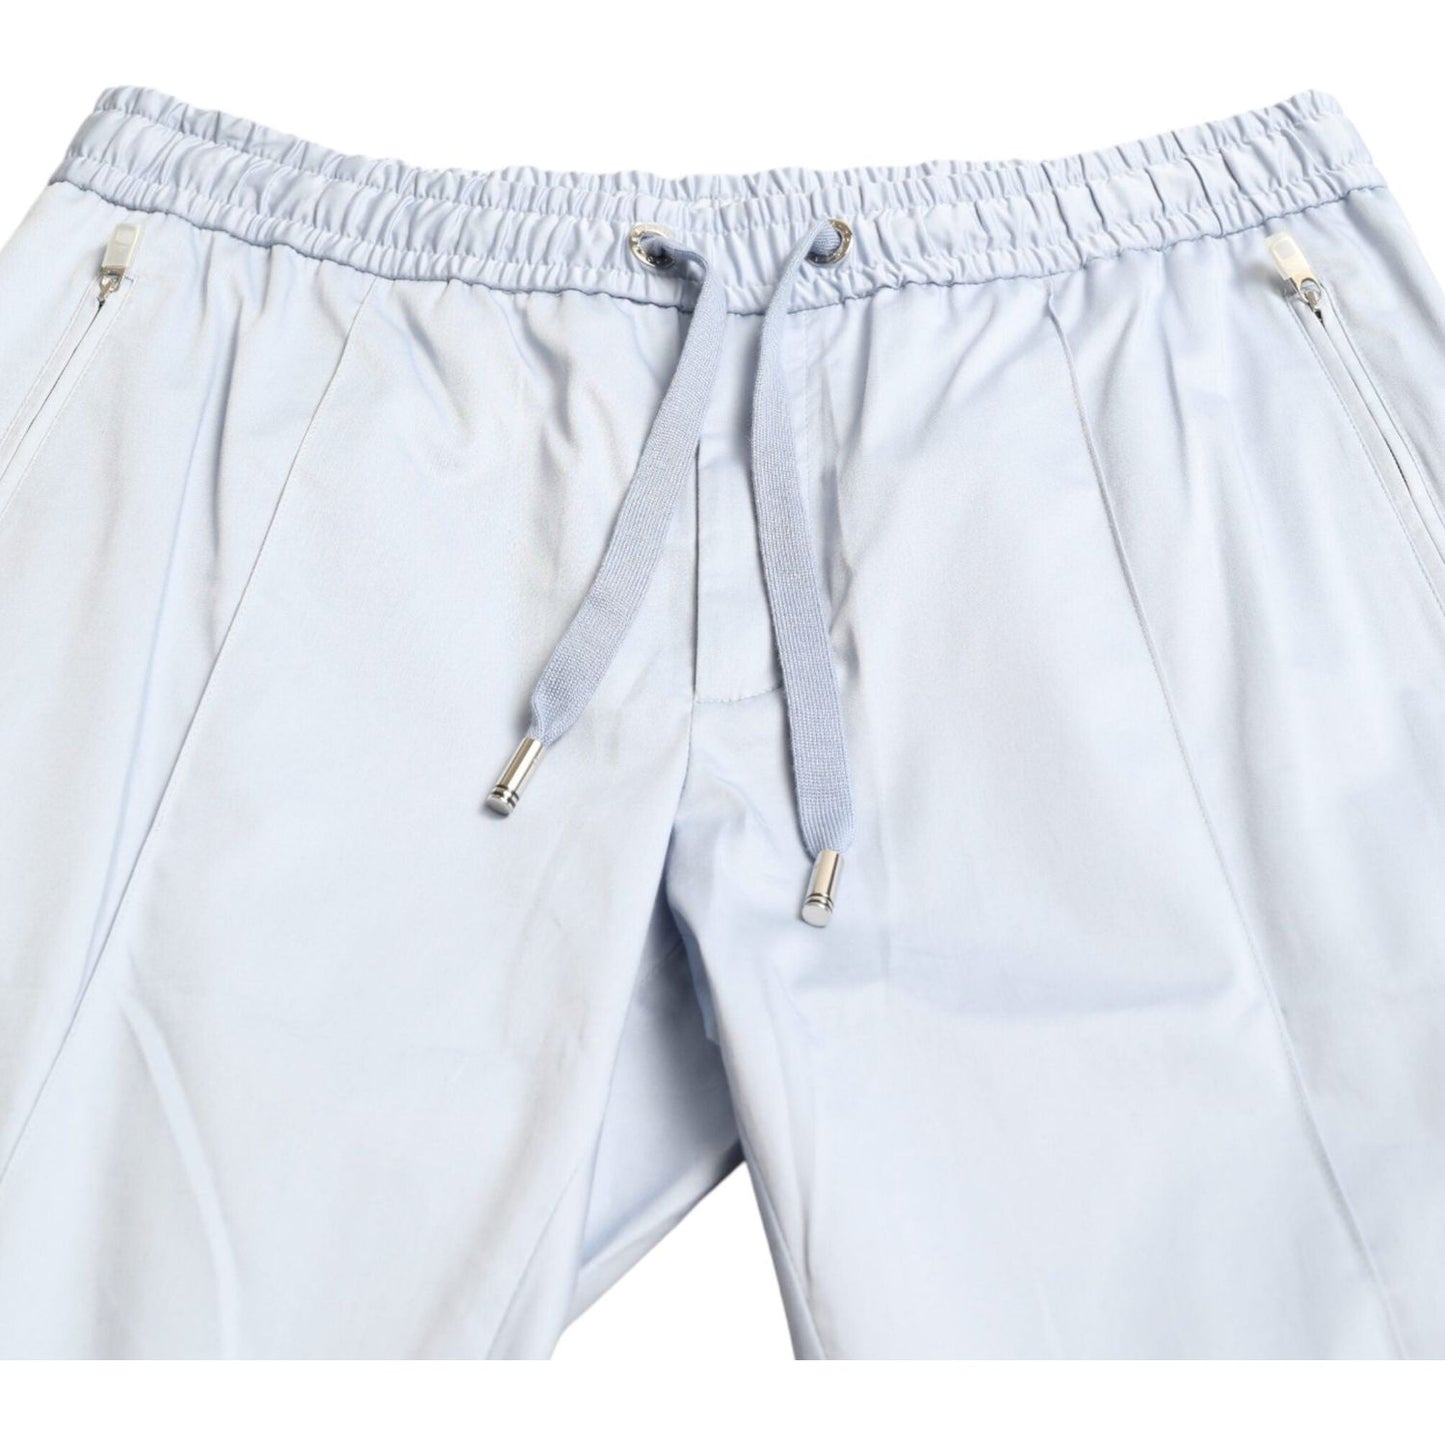 Dolce & Gabbana Elegant Light Blue Jogger Pants for Men light-blue-cotton-stretch-jogger-pants